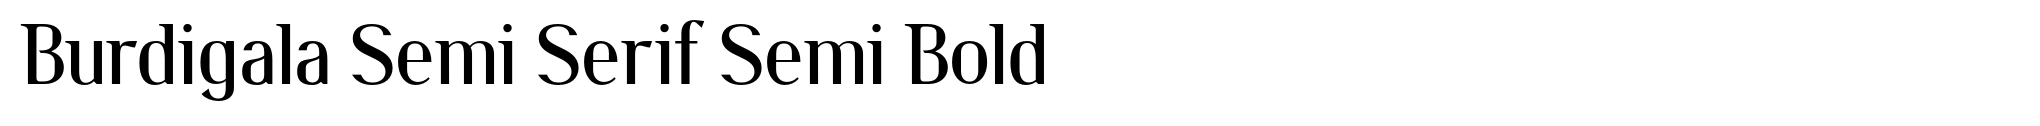 Burdigala Semi Serif Semi Bold image